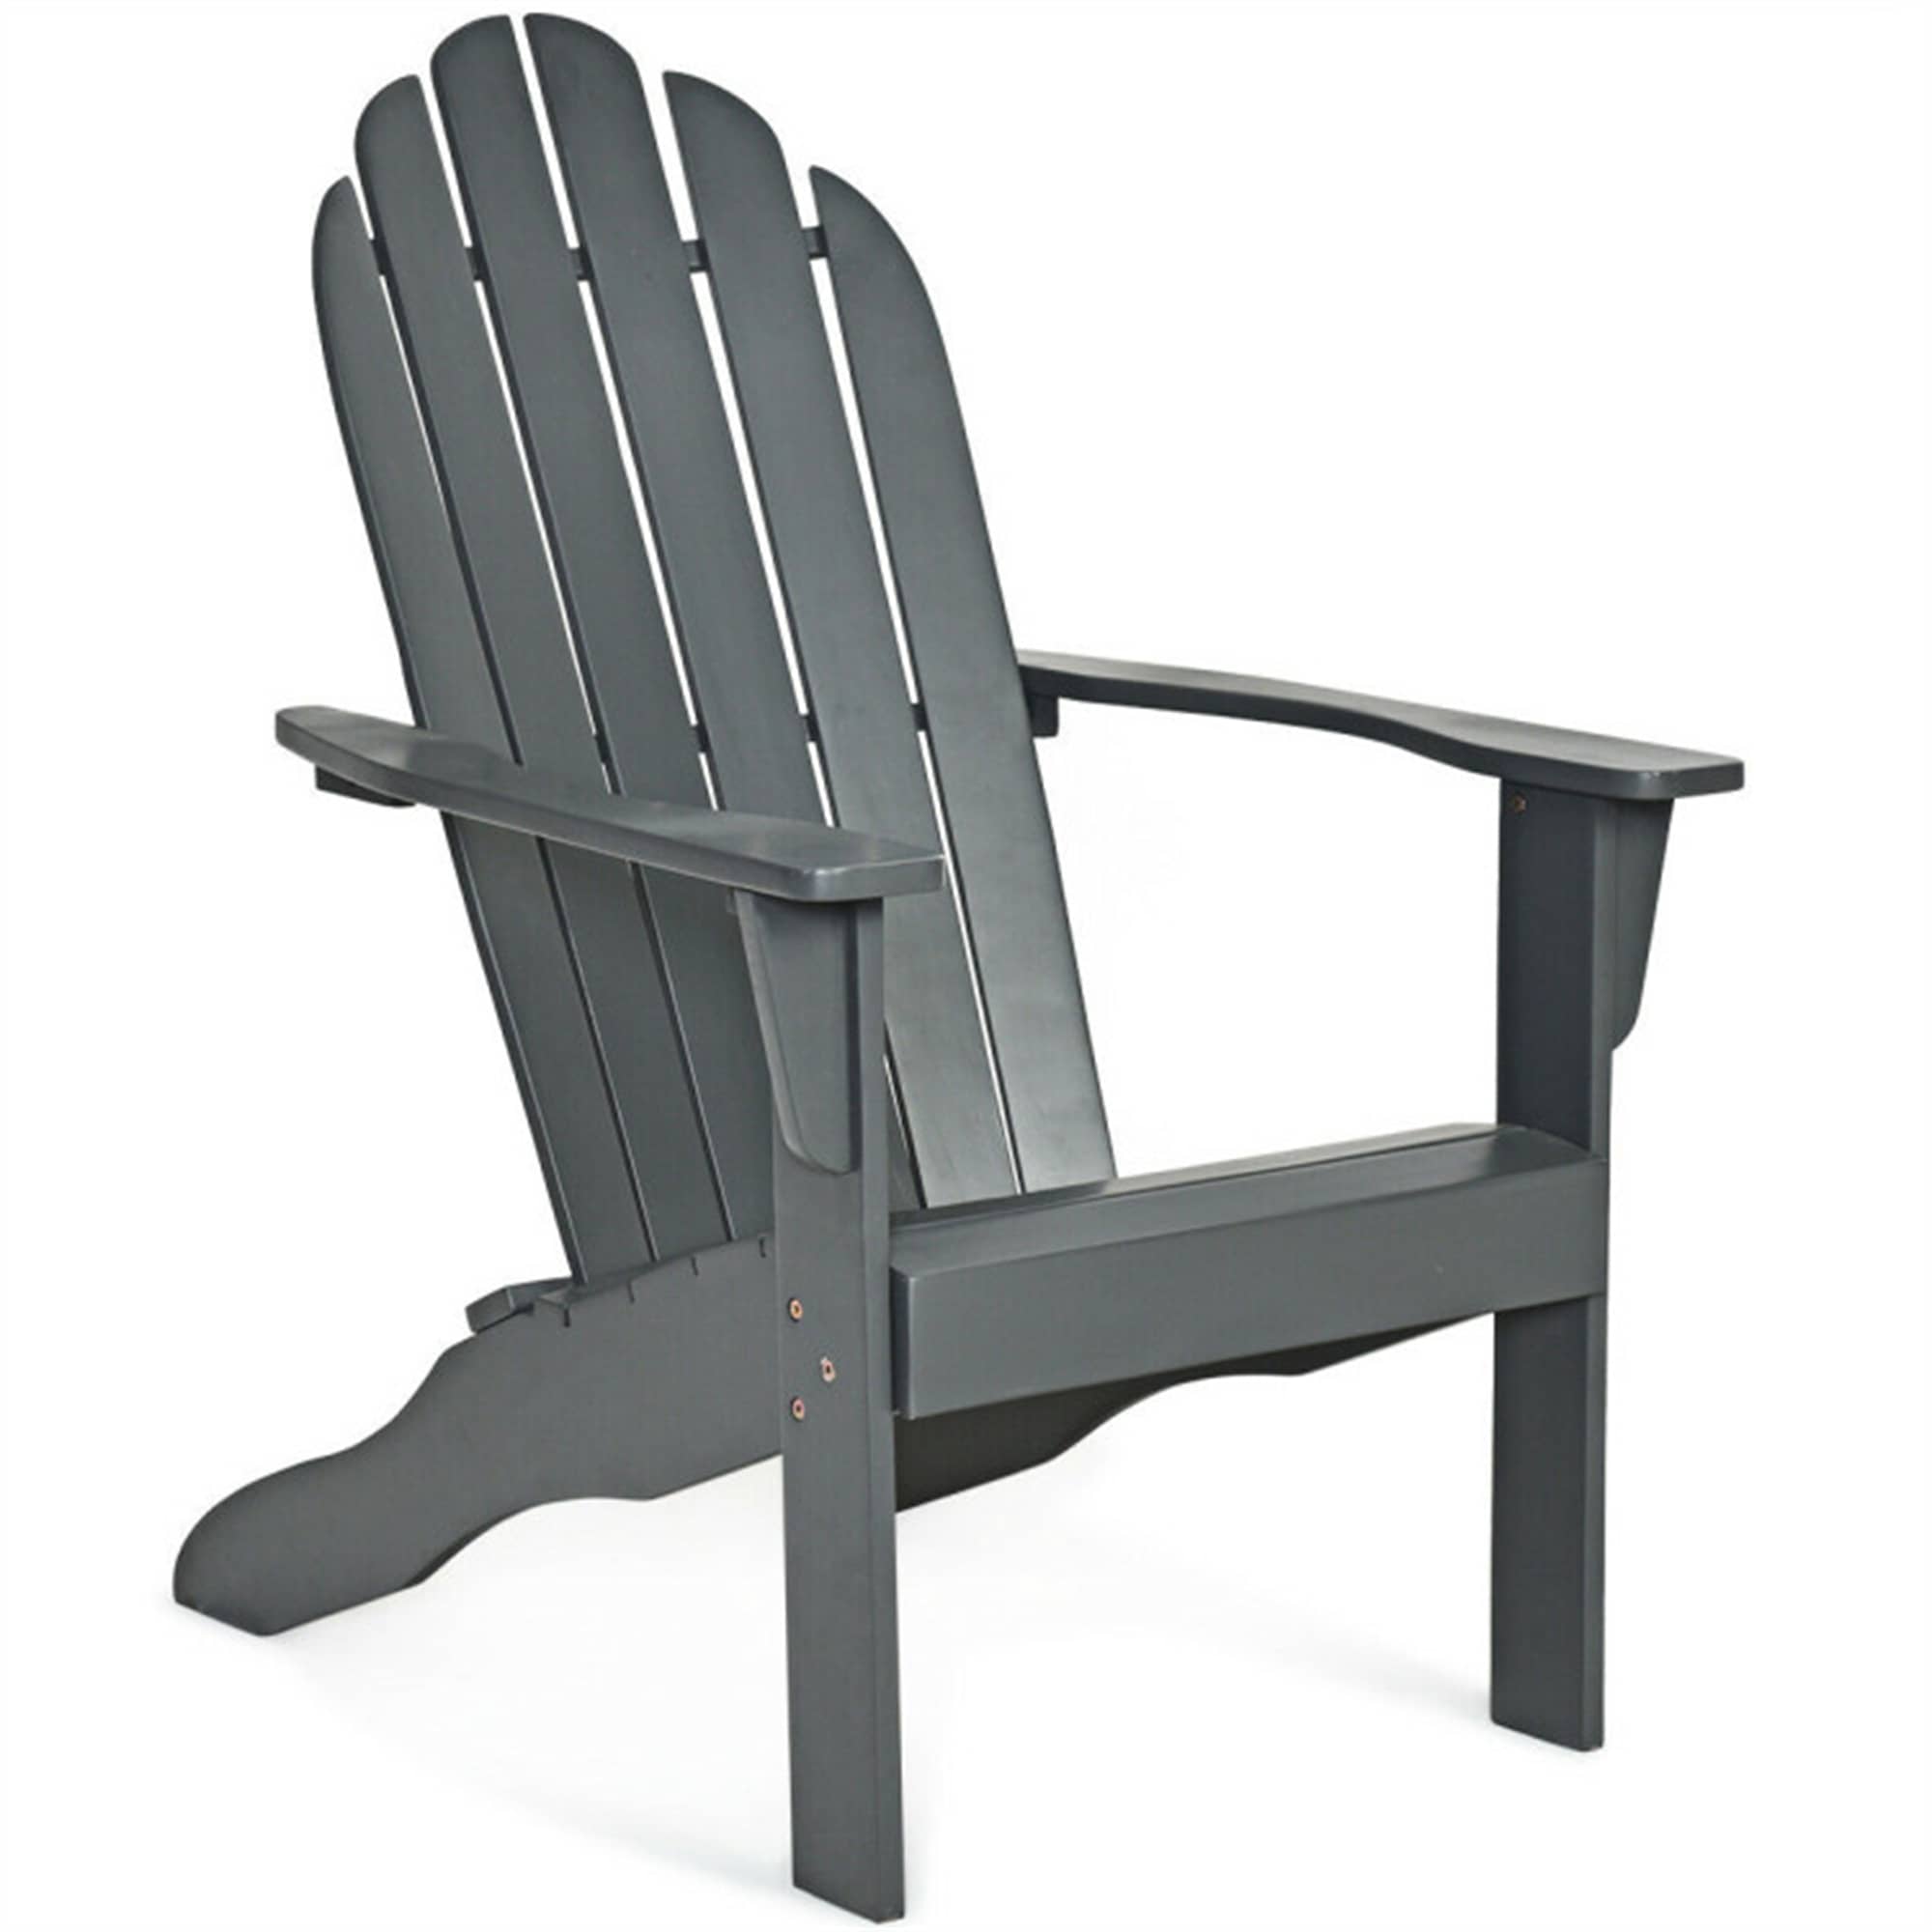 CASAINC Outdoor Patio Adirondack Chair Reclining Slat